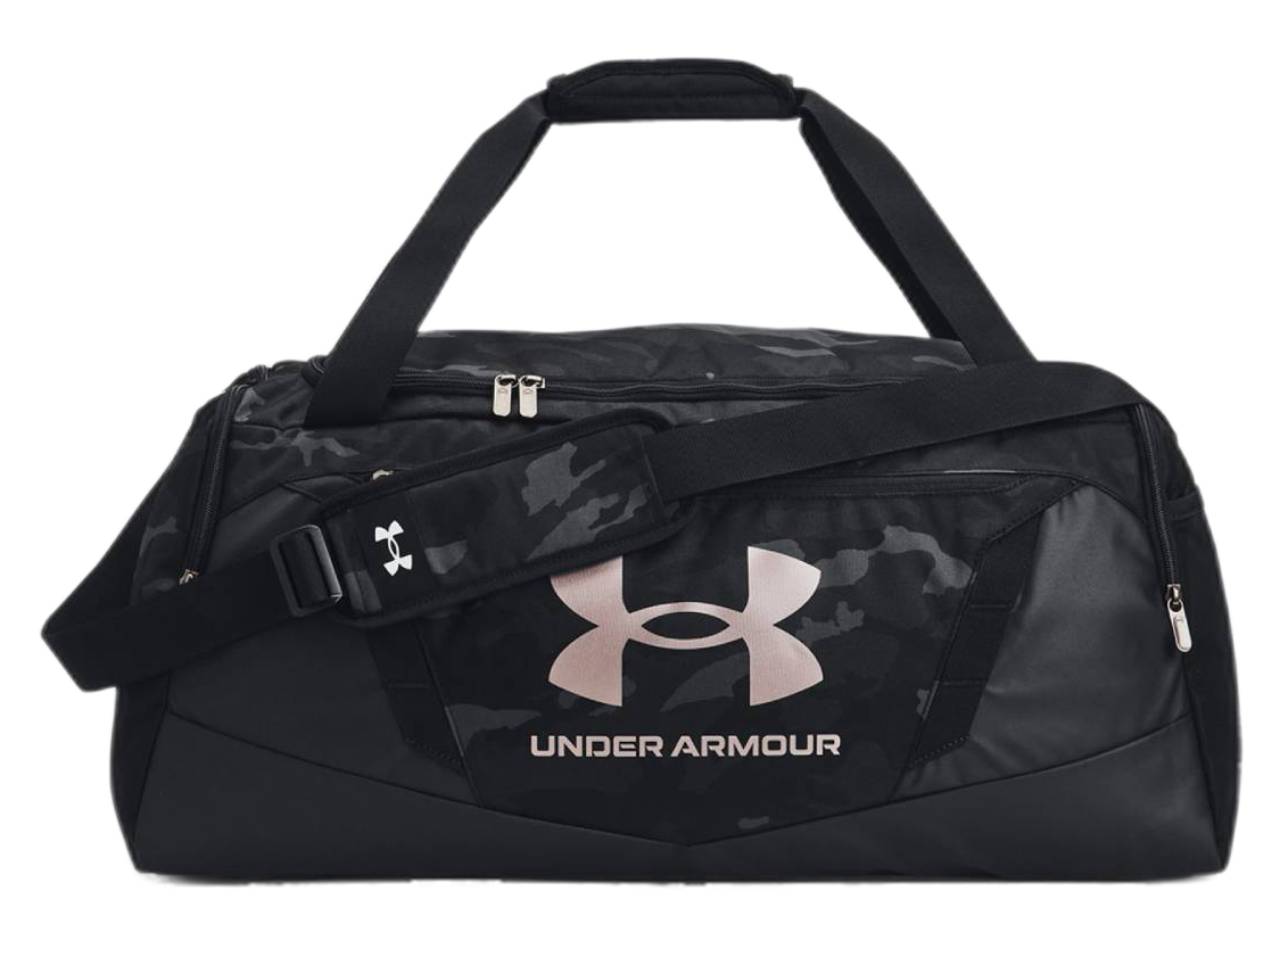 Under Armour 5.0 Duffel Bag - Medium